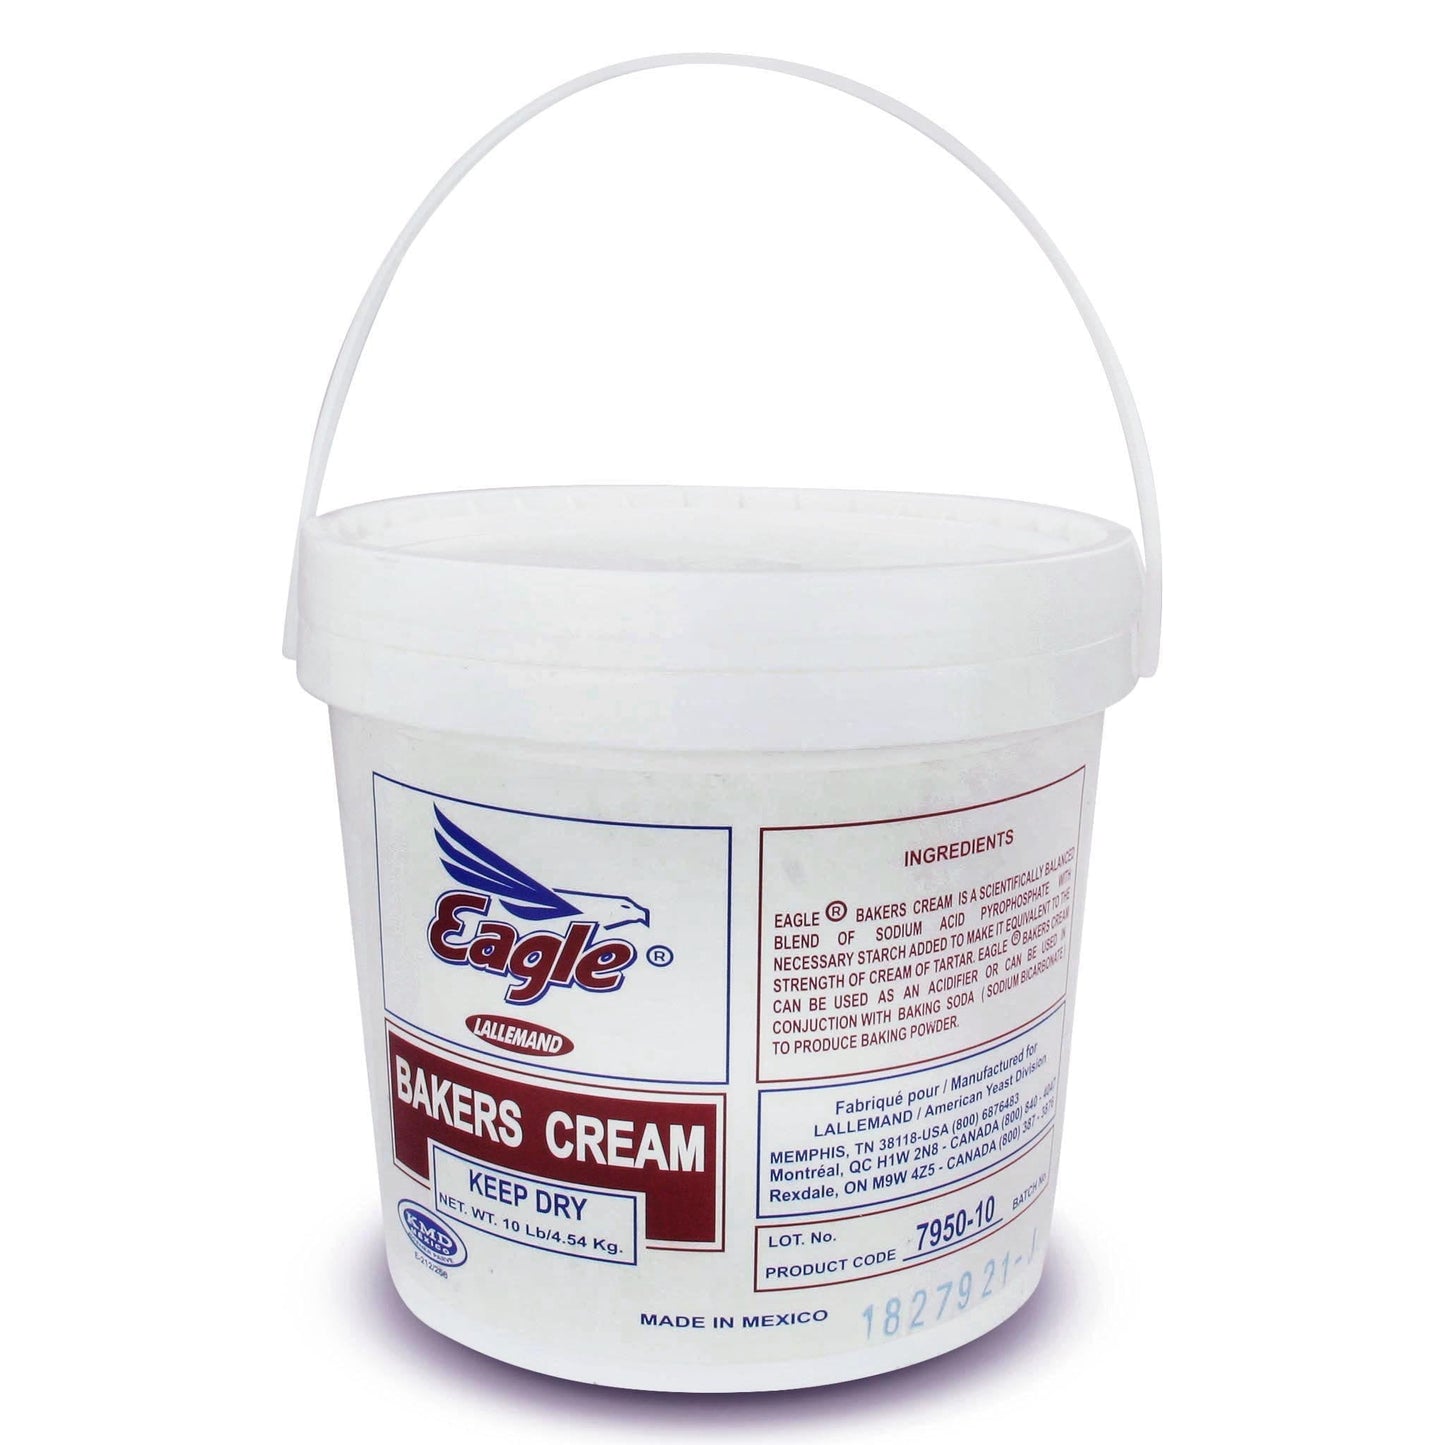 Eagle Bakers Cream/Cream of Tartar replacement